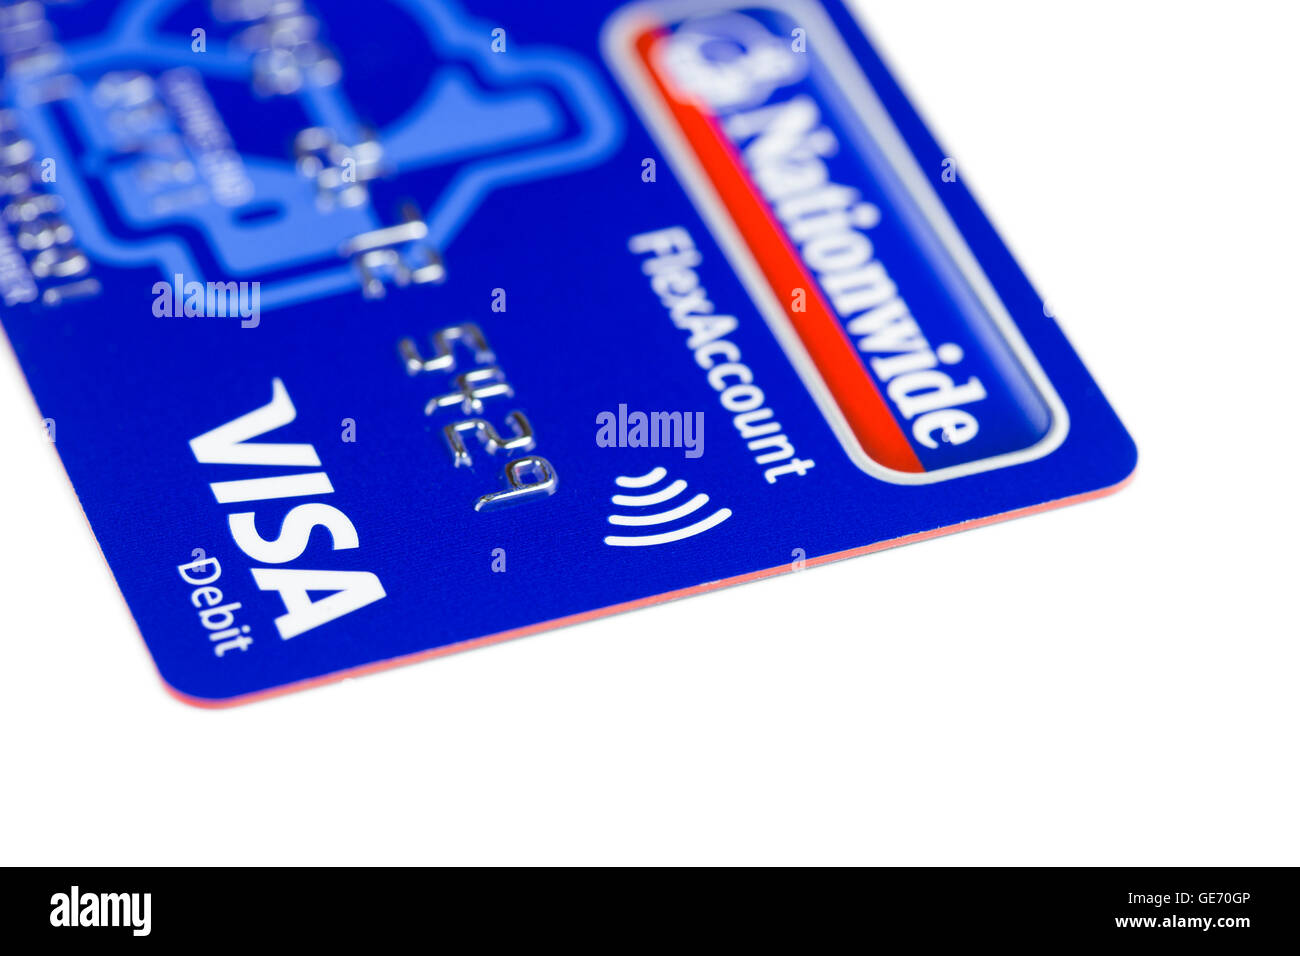 Visa paywave debit card using contactless technology for payment, UK Stock Photo